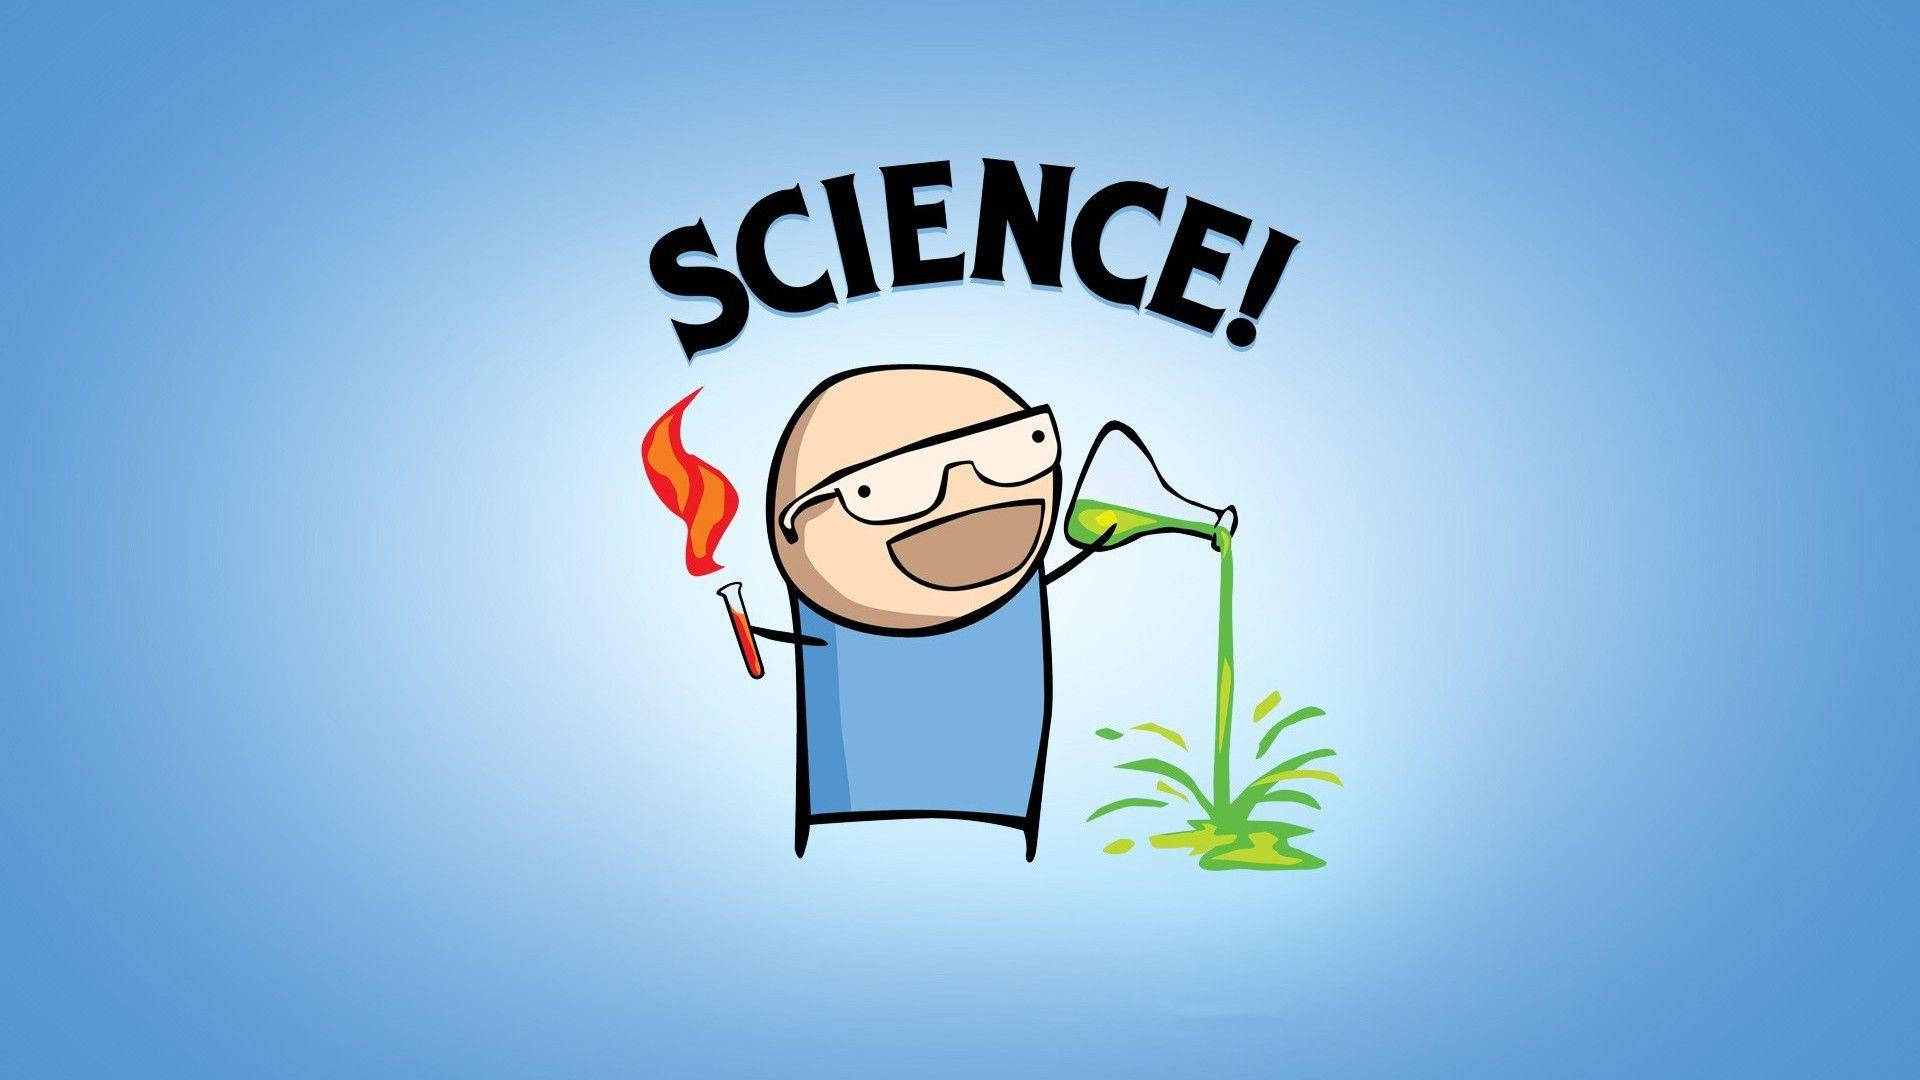 Fun Science Cartoon Art Wallpaper